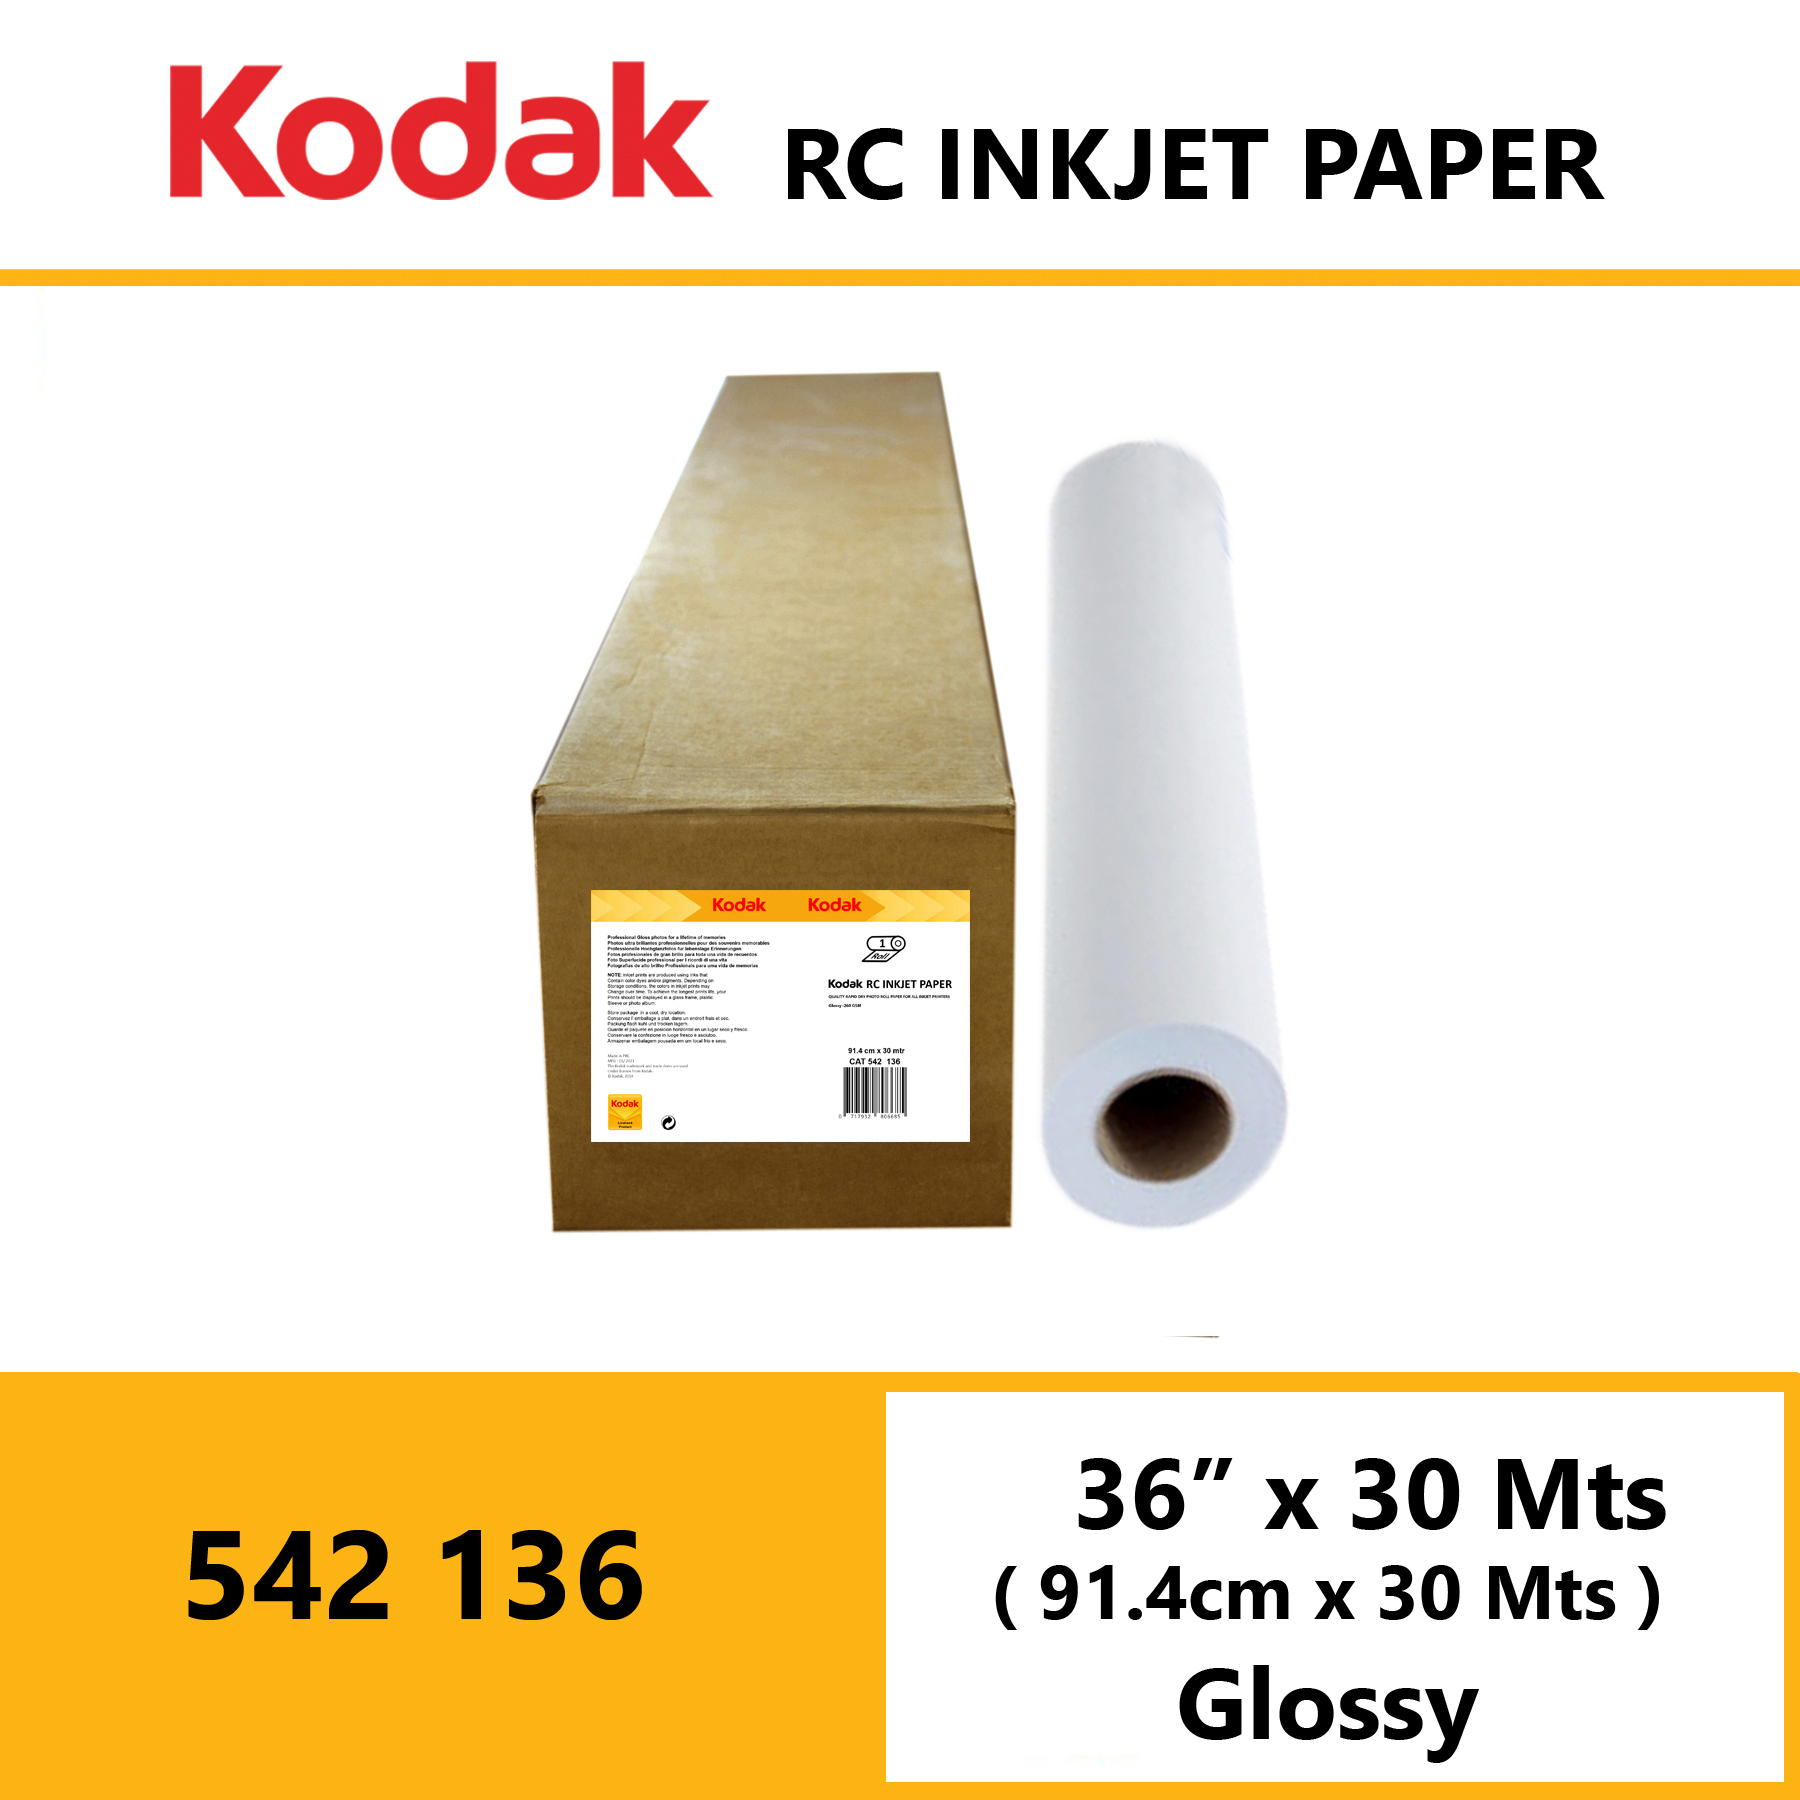 Kodak Inkjet RC Paper 36” x 30 Mtrs Glossy